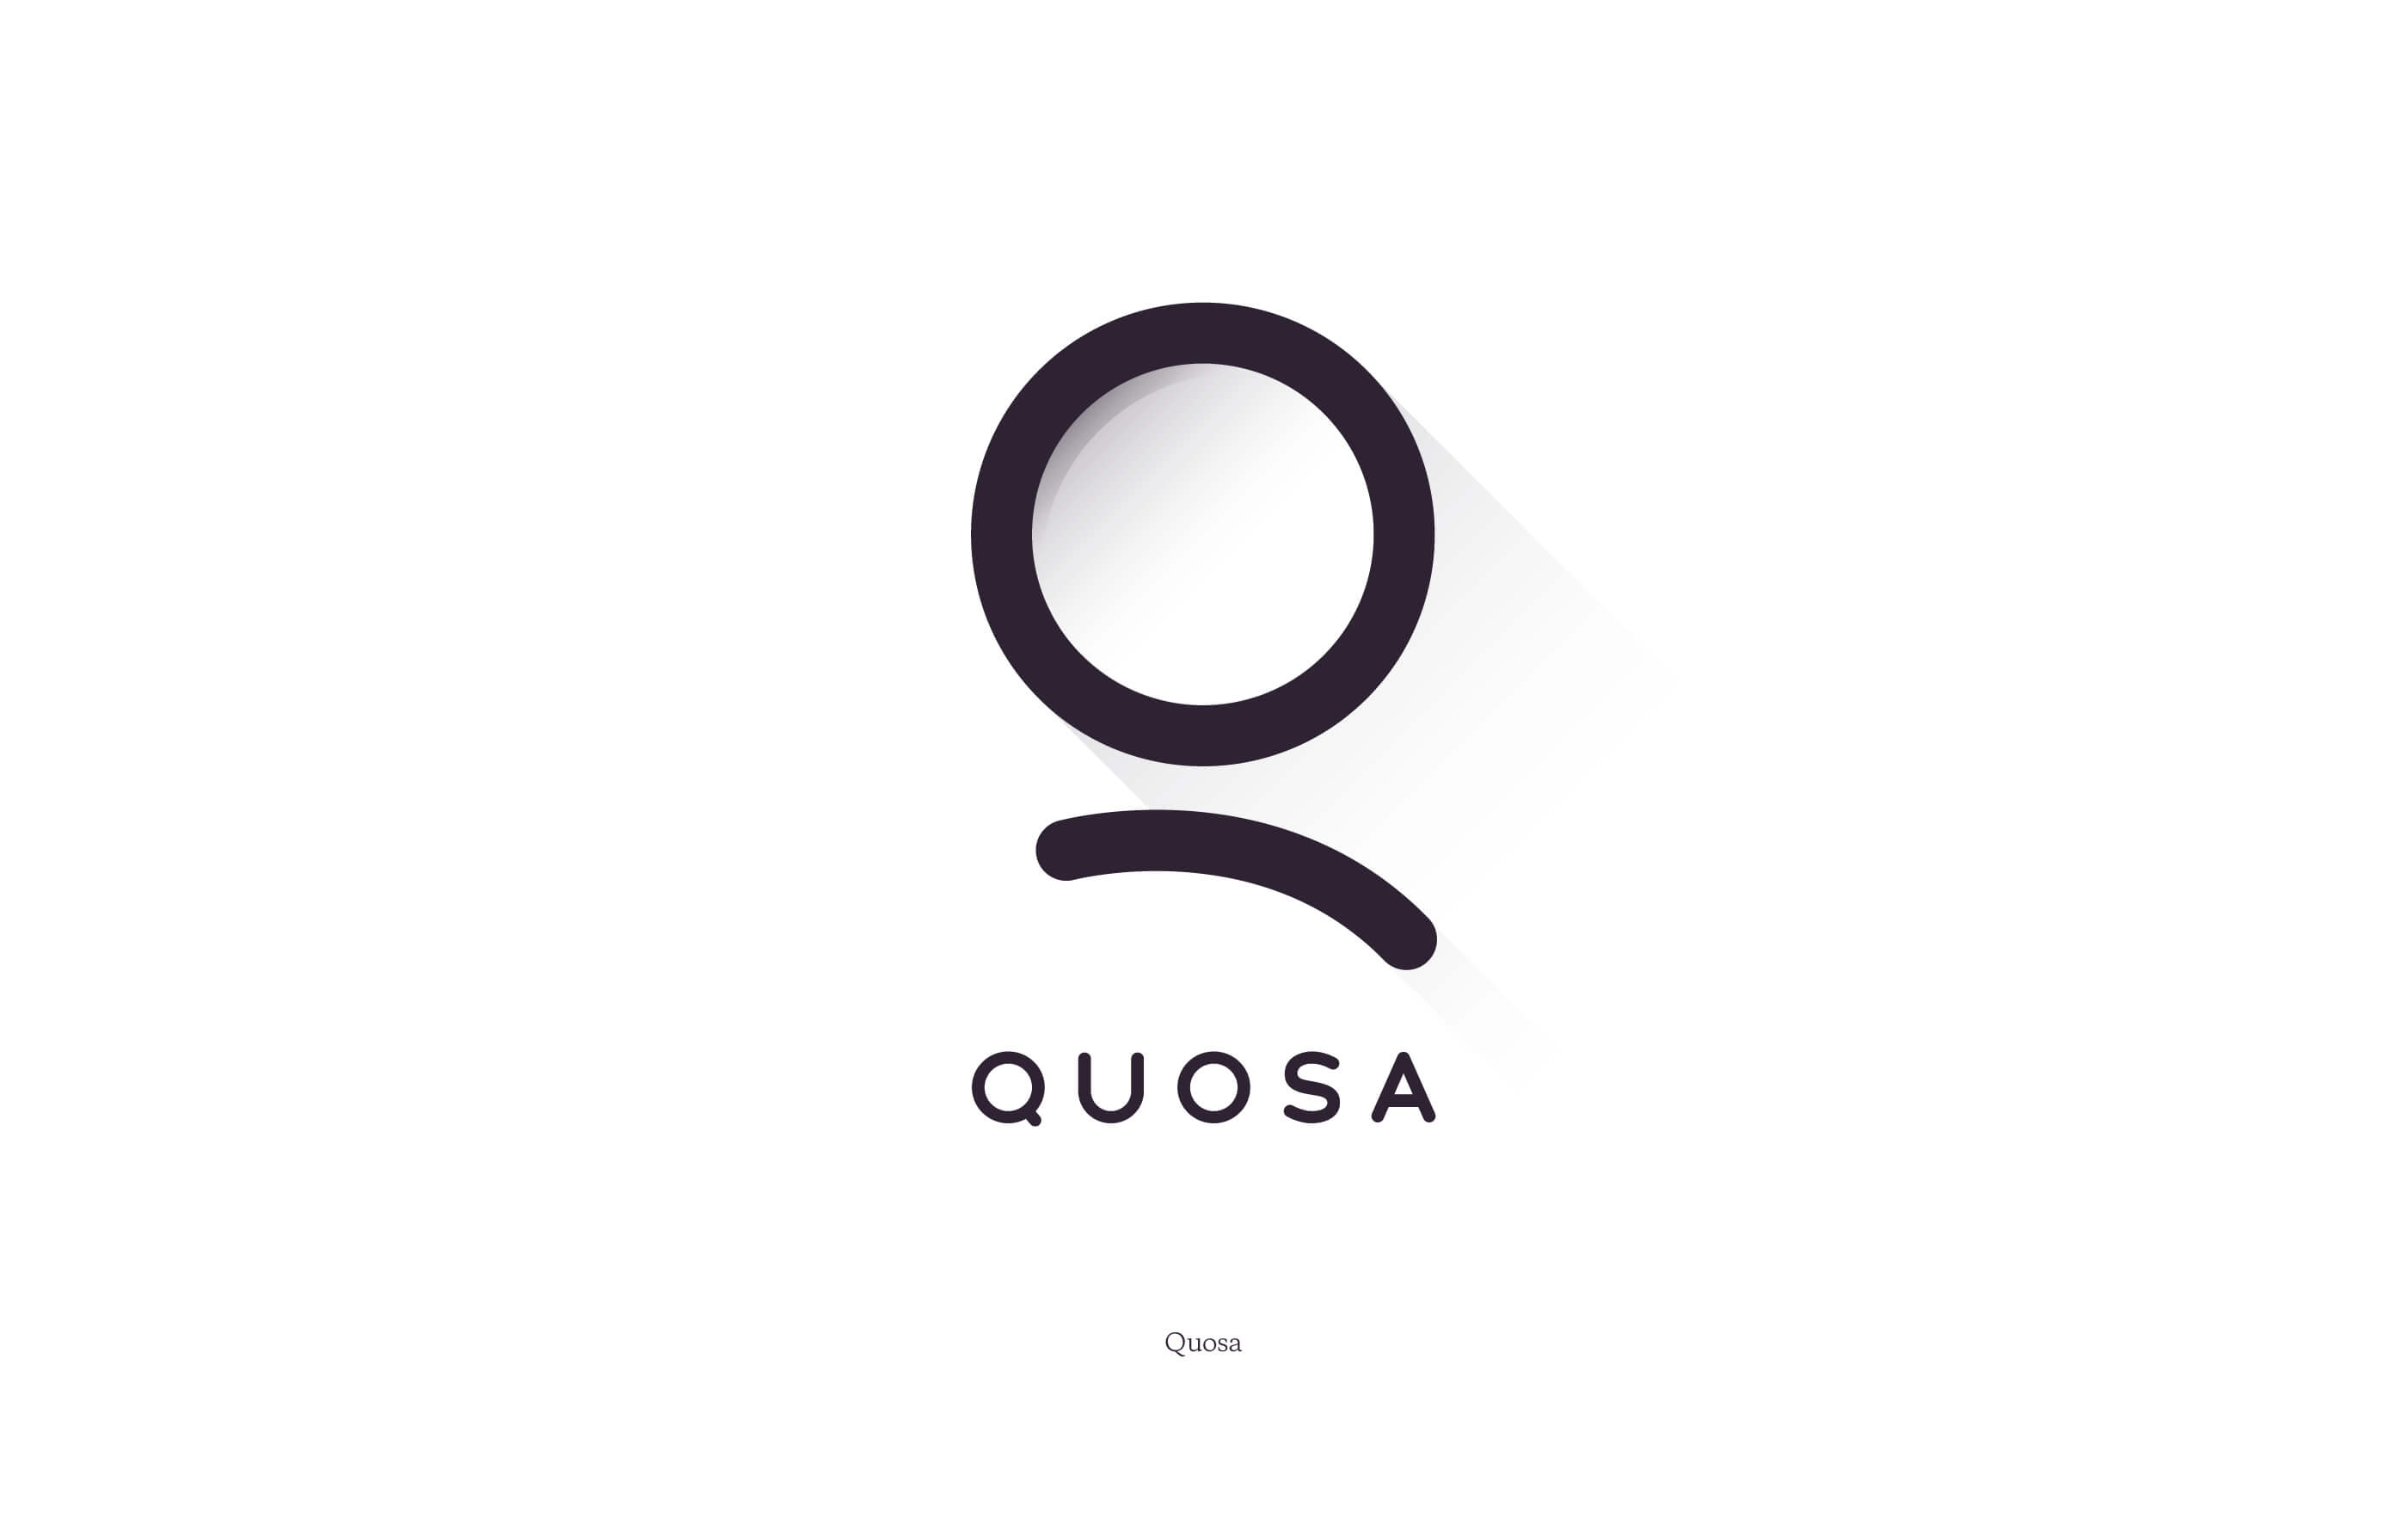 Black QUOSA logo design on a white background